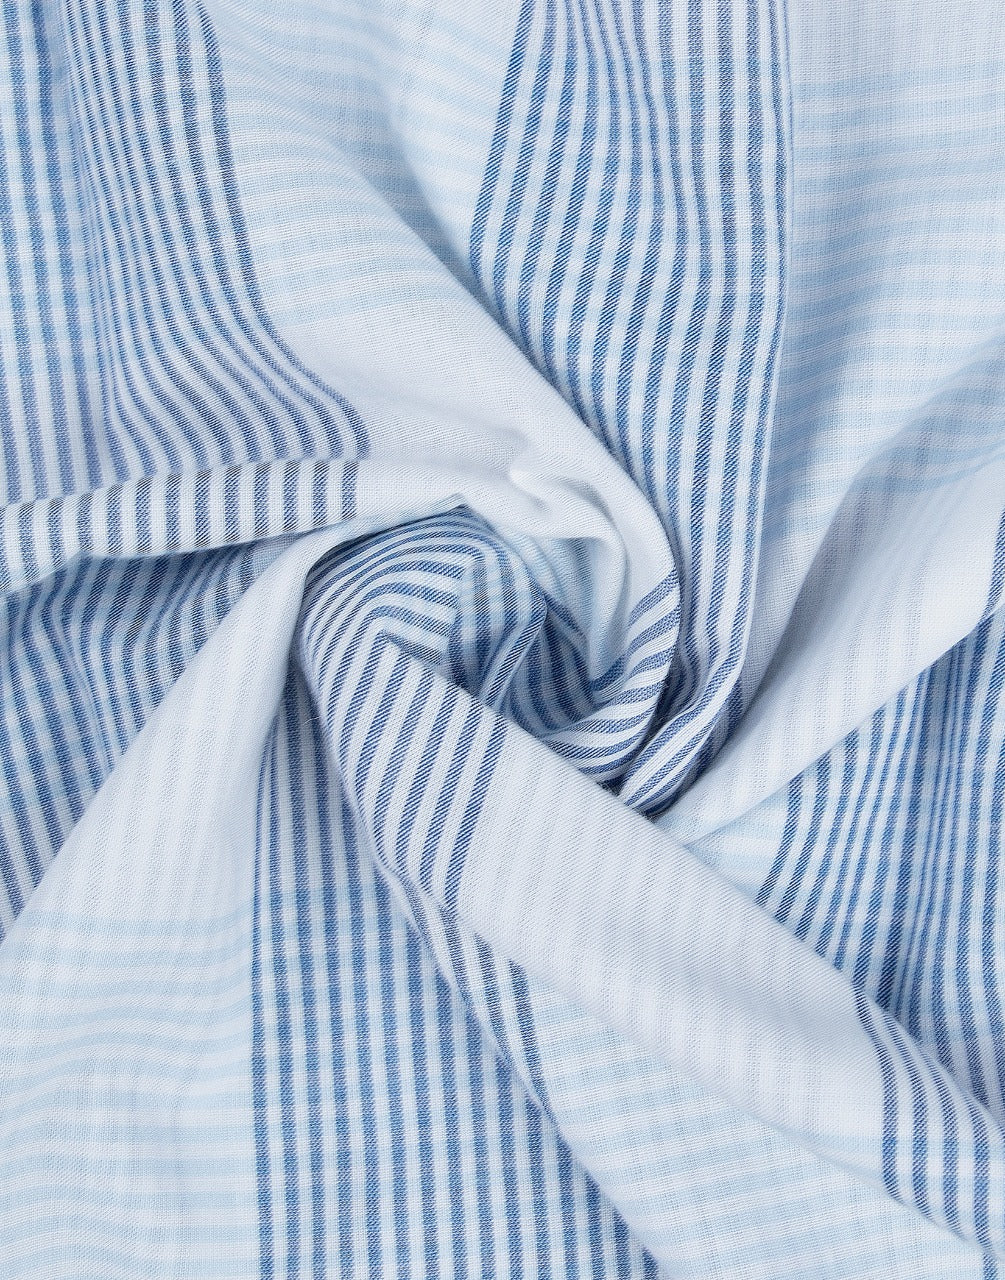 Blue straight line formal shirt